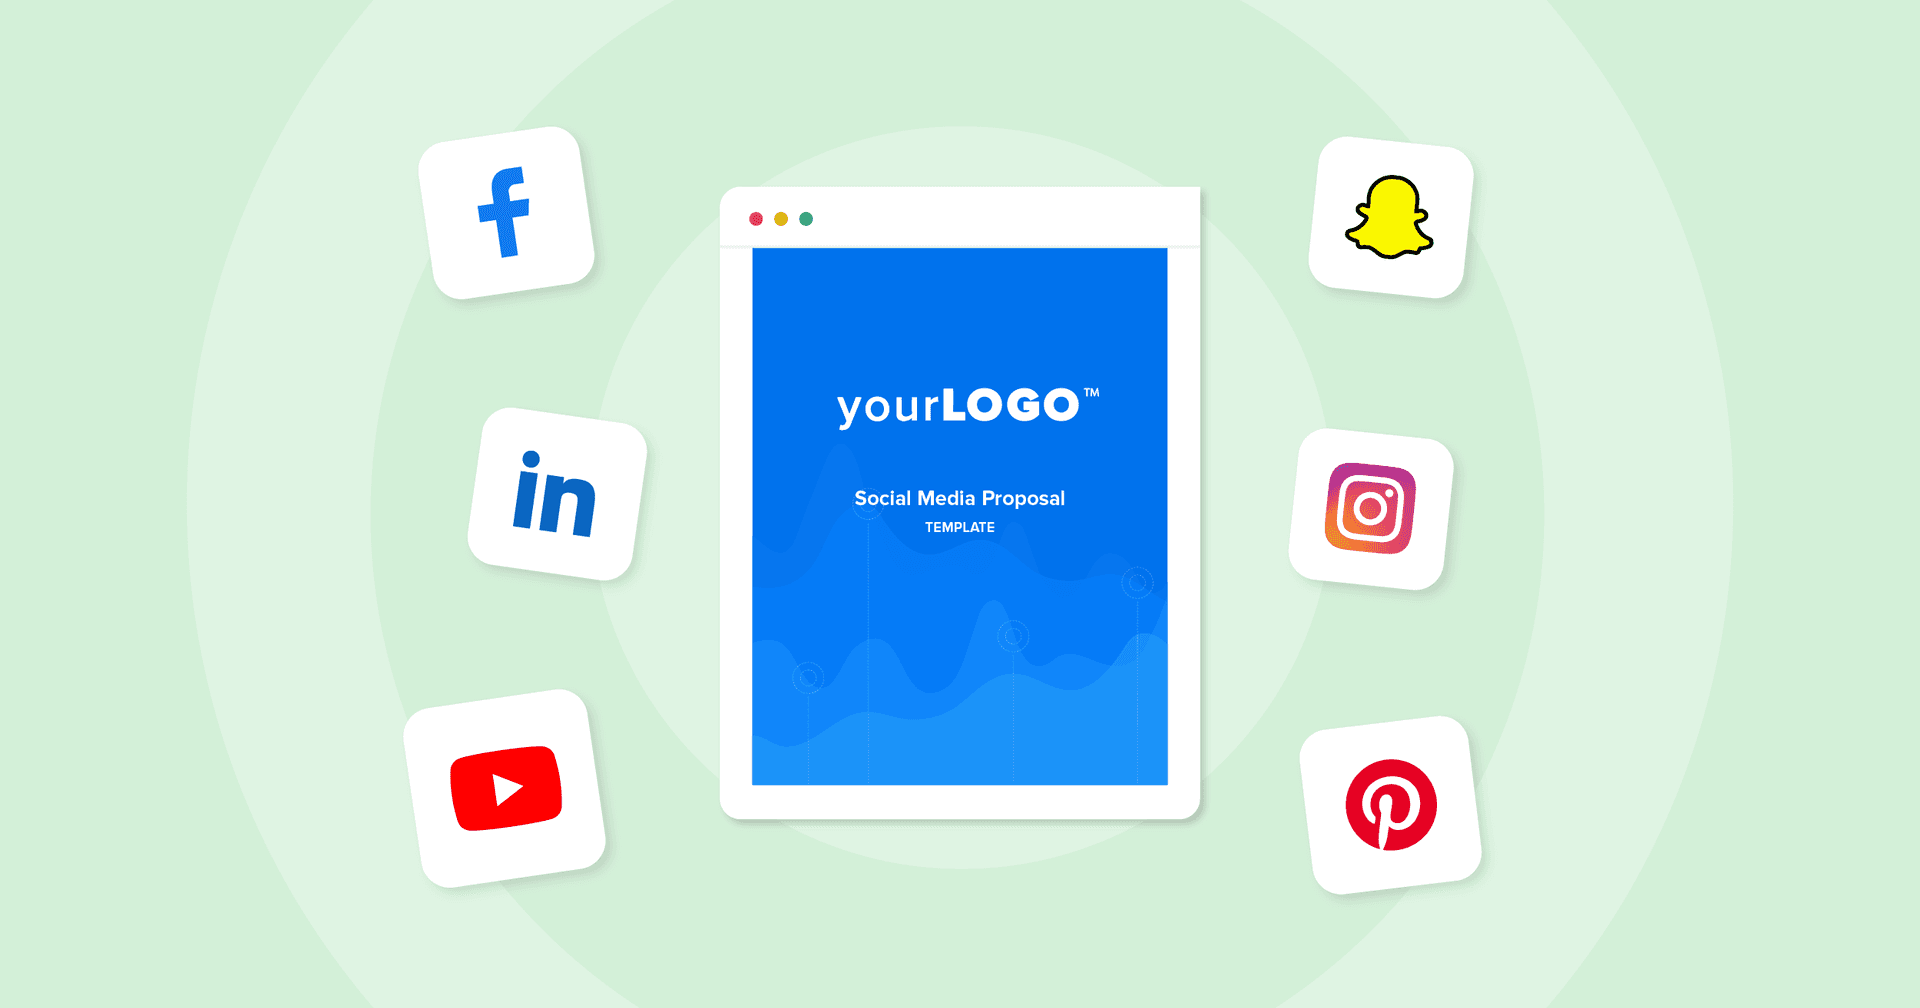 Image of a social media proposal template with logos of popular social media platforms